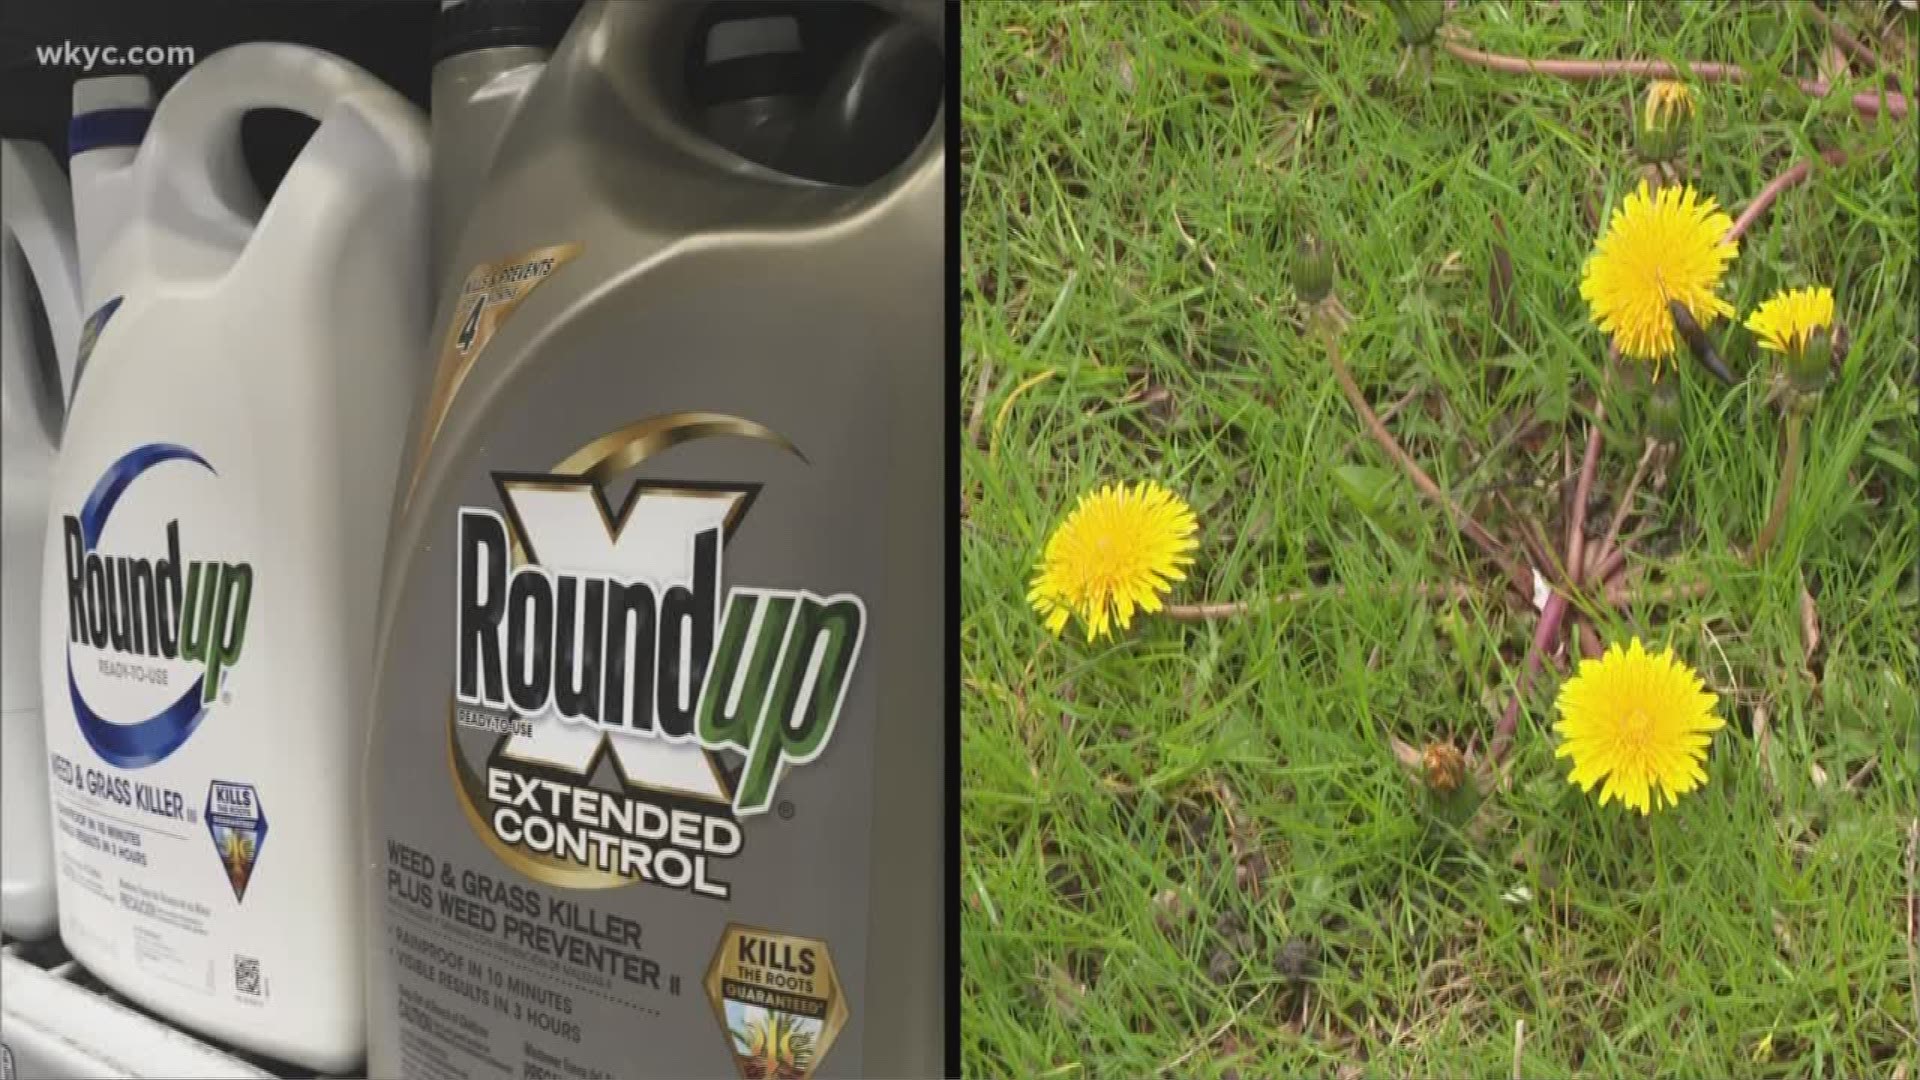 Roundup Weed Killer Is Safe Epa Says But Some Studies Disagree